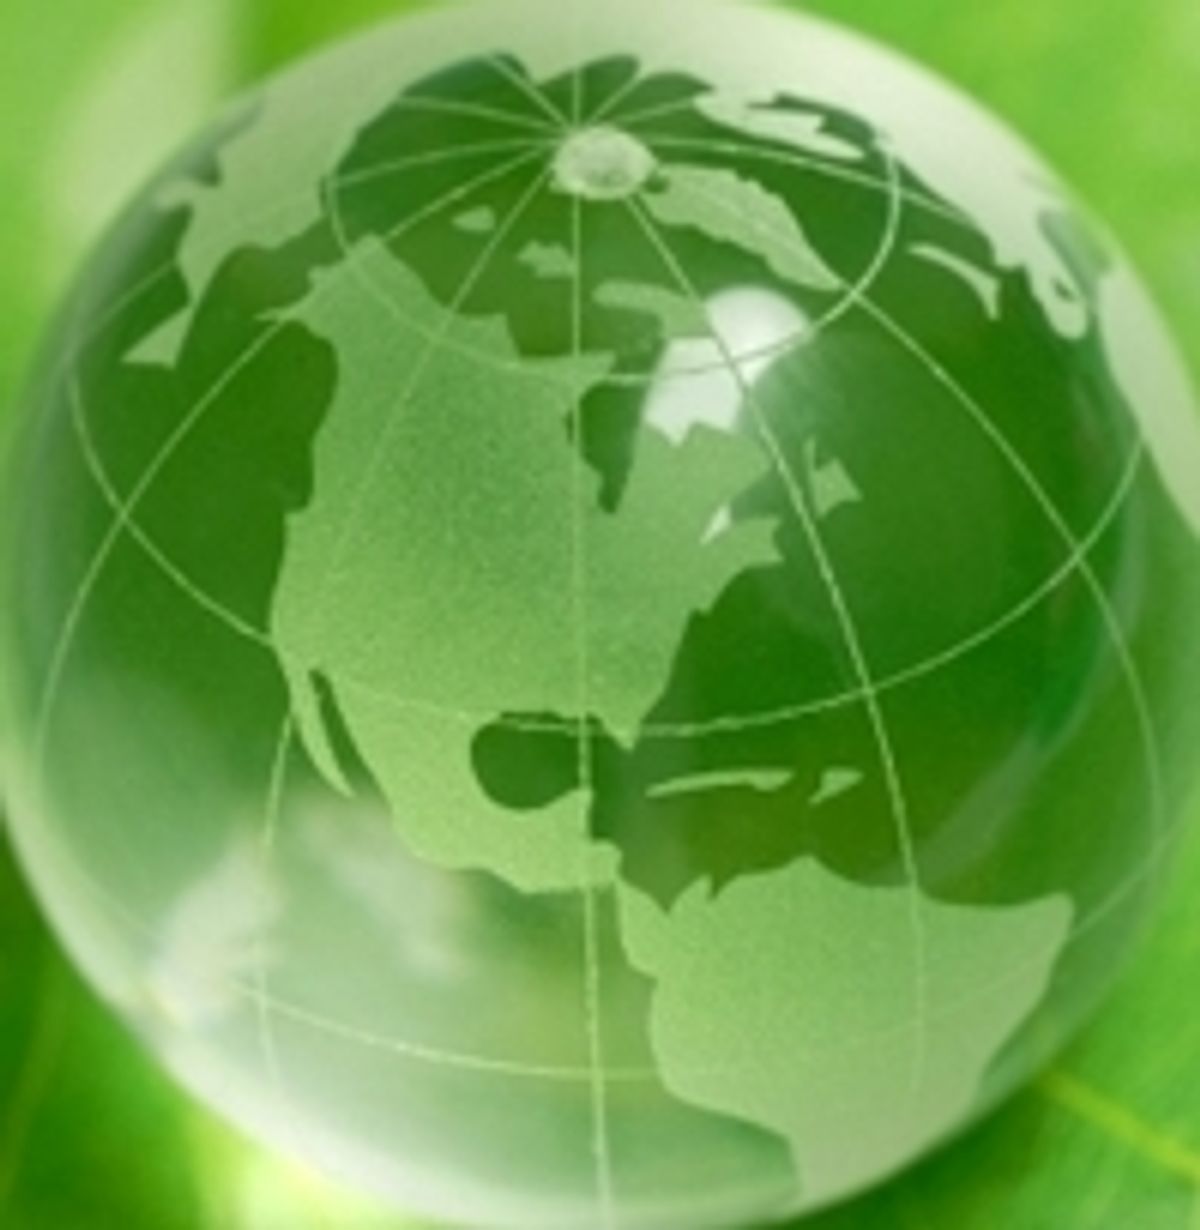 Penske Logistics Recognized for Sustainability Efforts